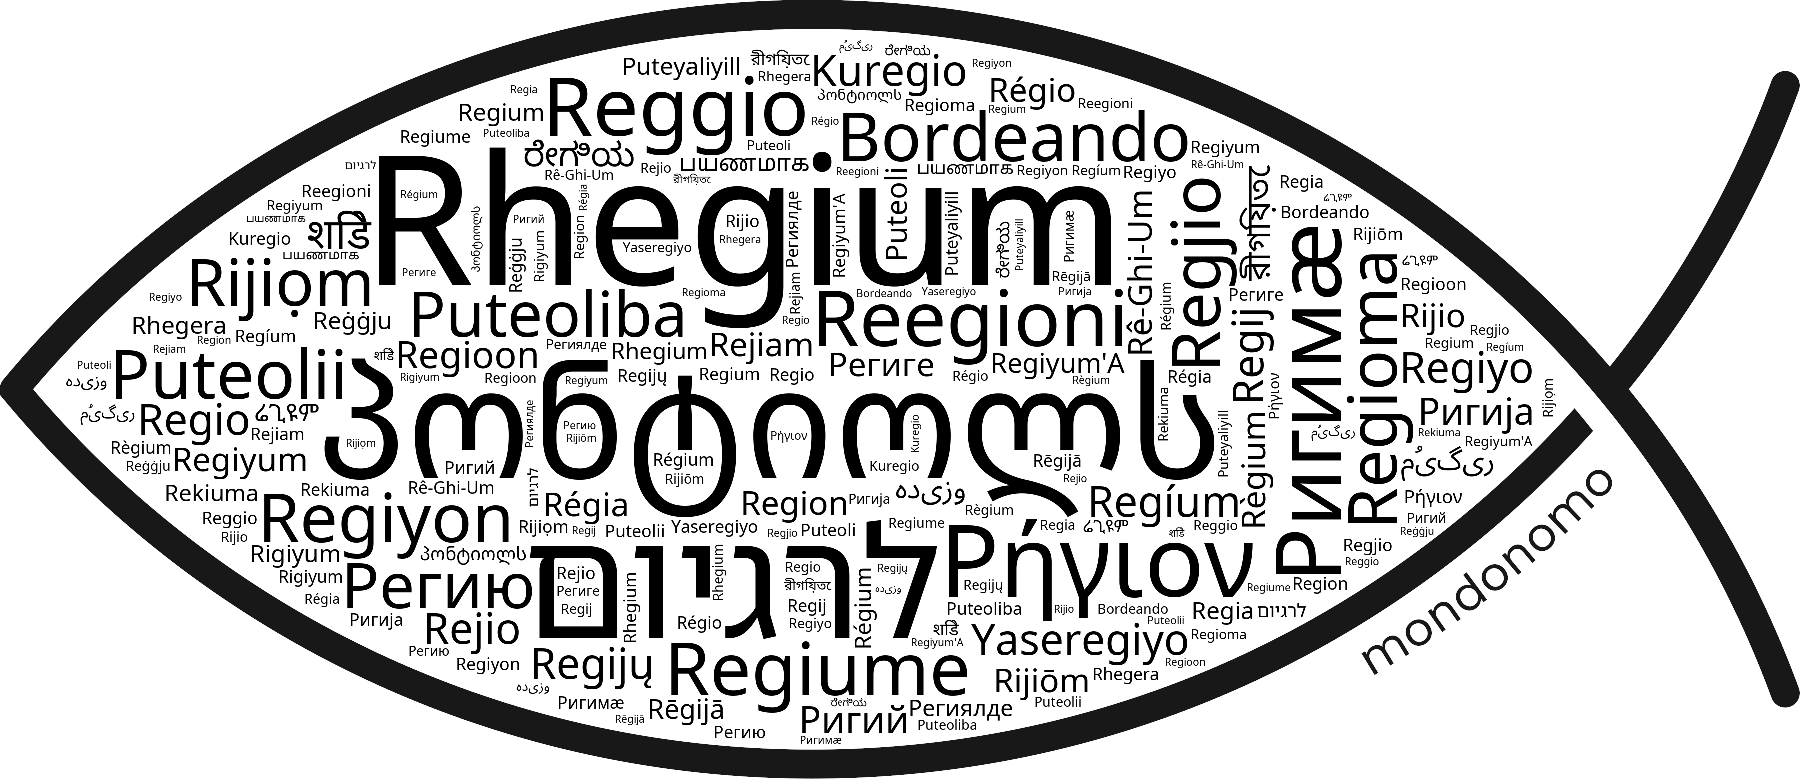 Name Rhegium in the world's Bibles